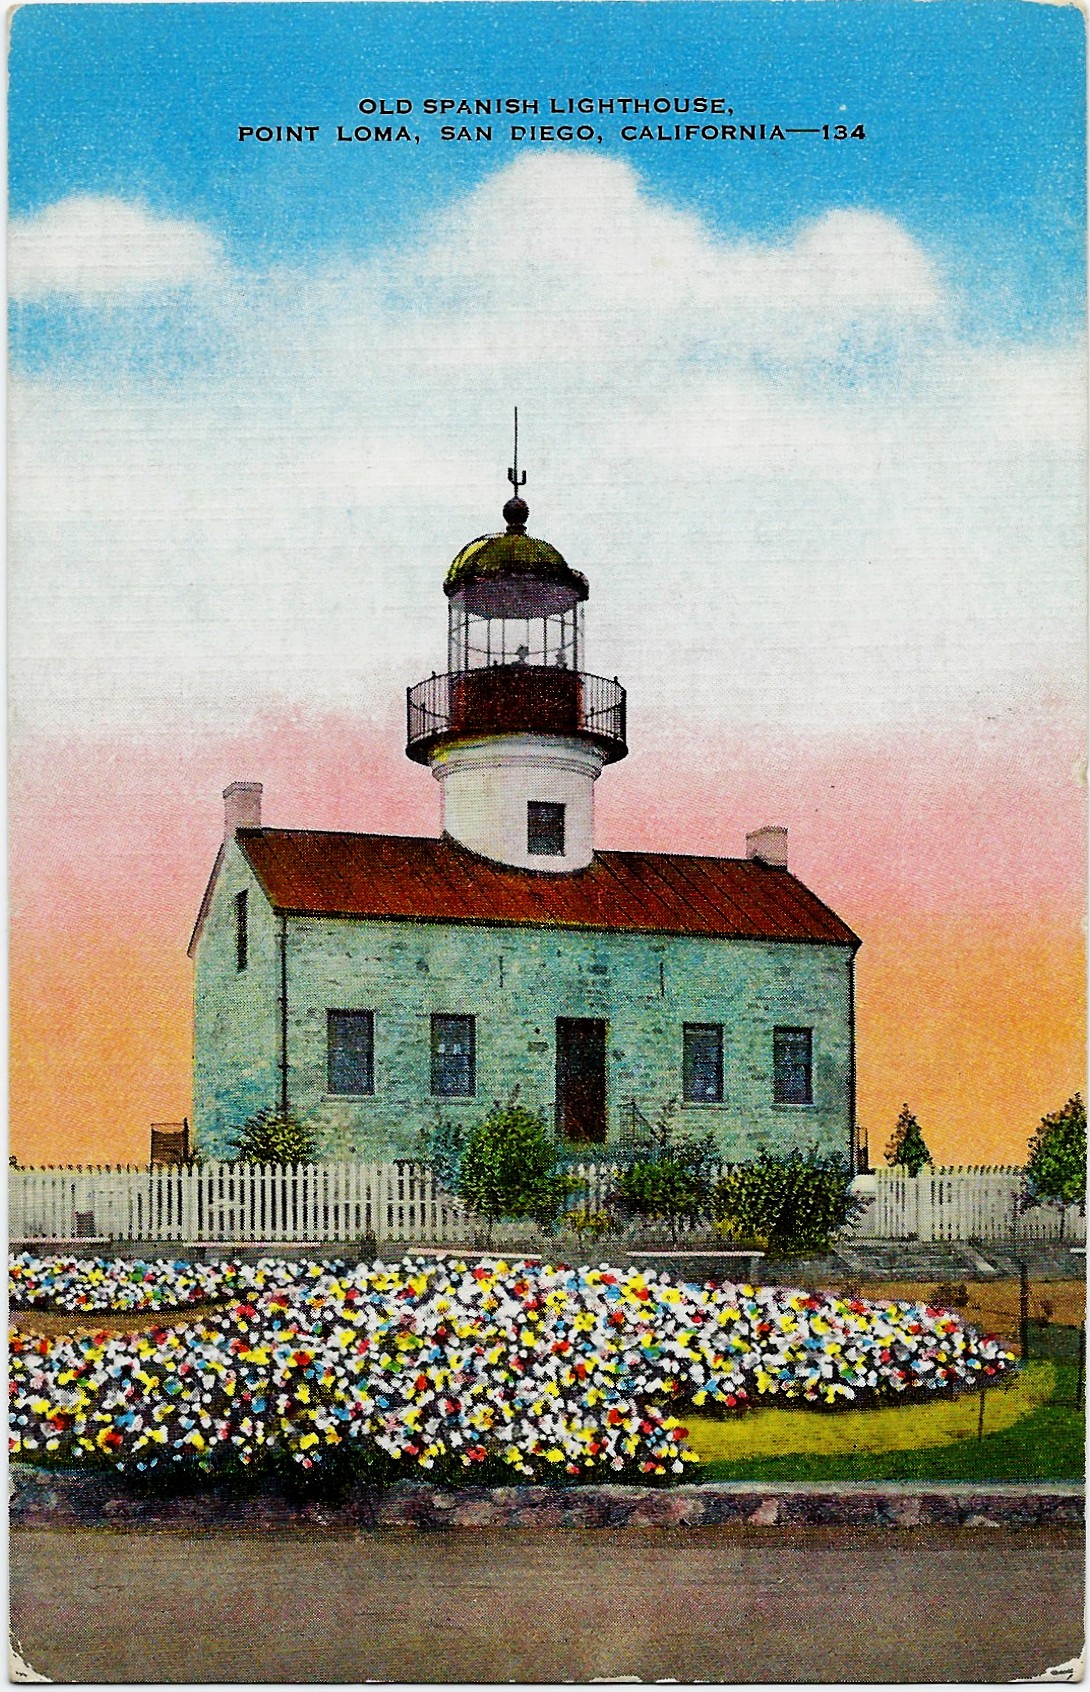 Old Spanish Lighthouse Point Loma San Diego Postcard 134 15431